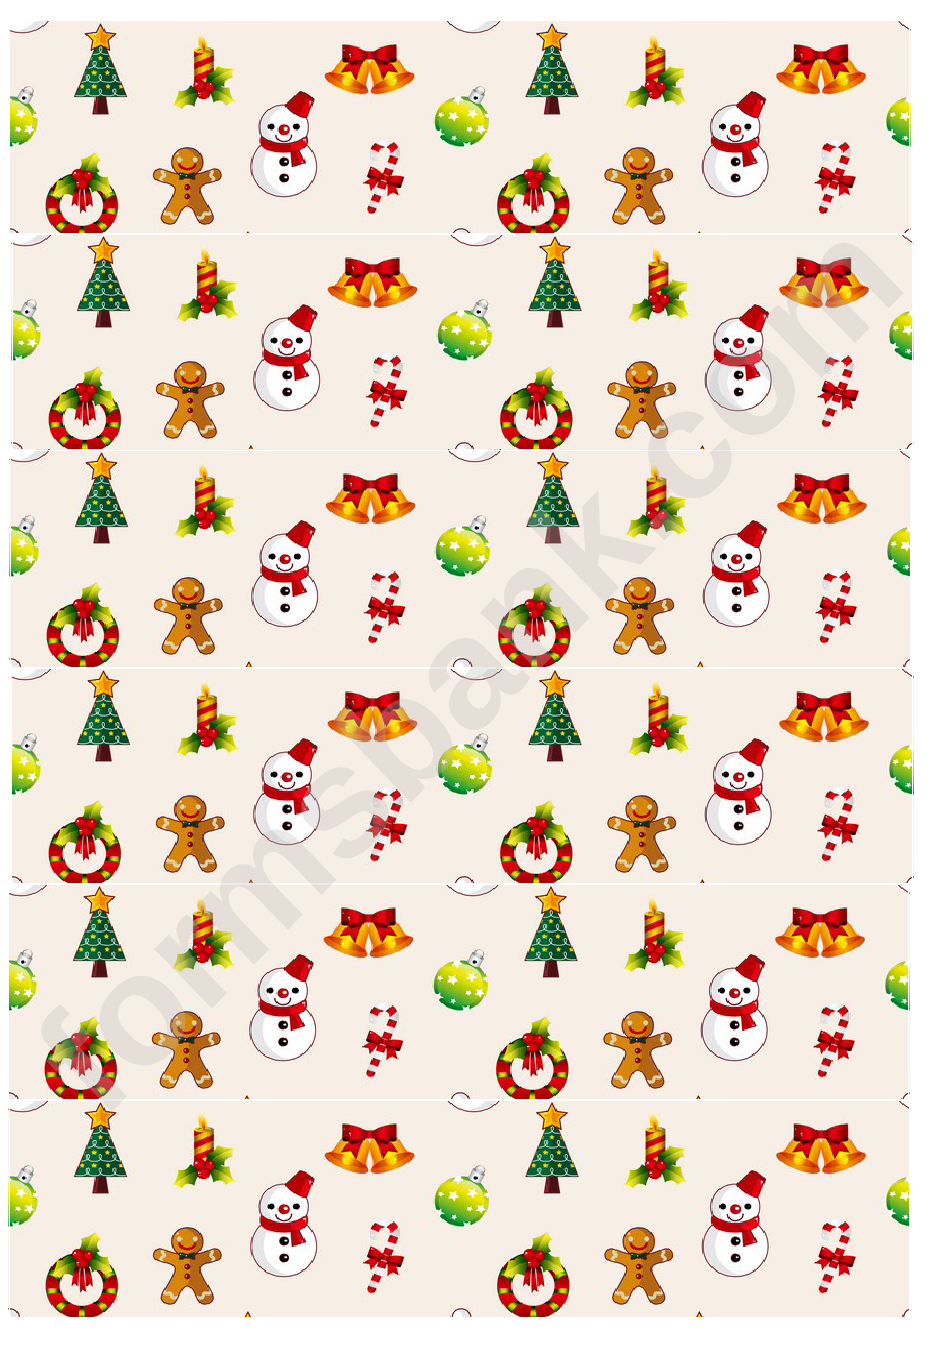 Christmas Symbols Paper Chain Template printable pdf download